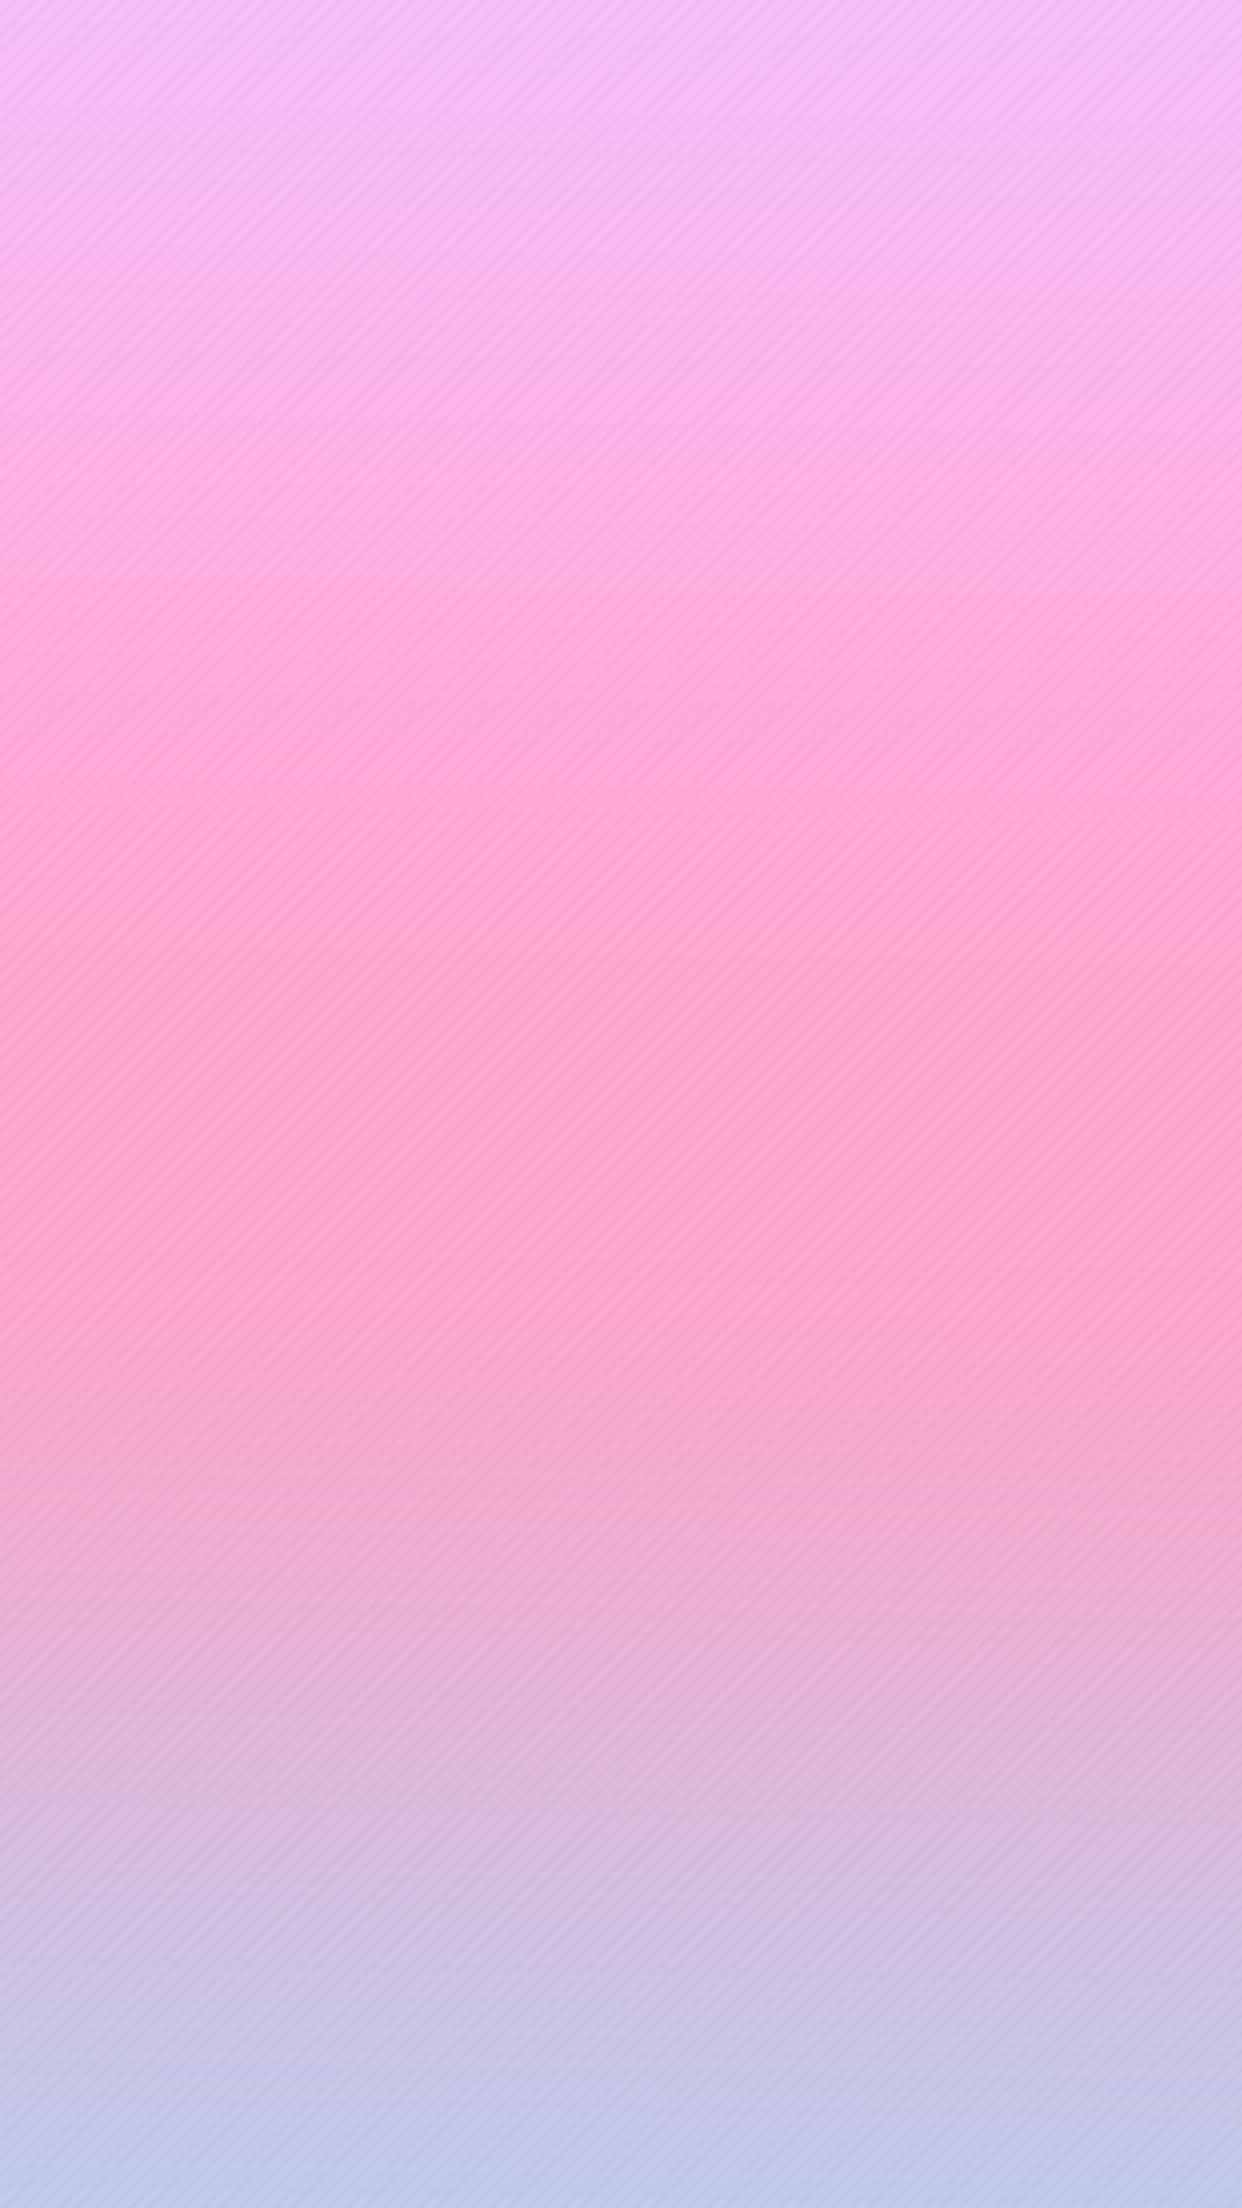 Pink 4k iPhone Wallpapers  Wallpaper Cave